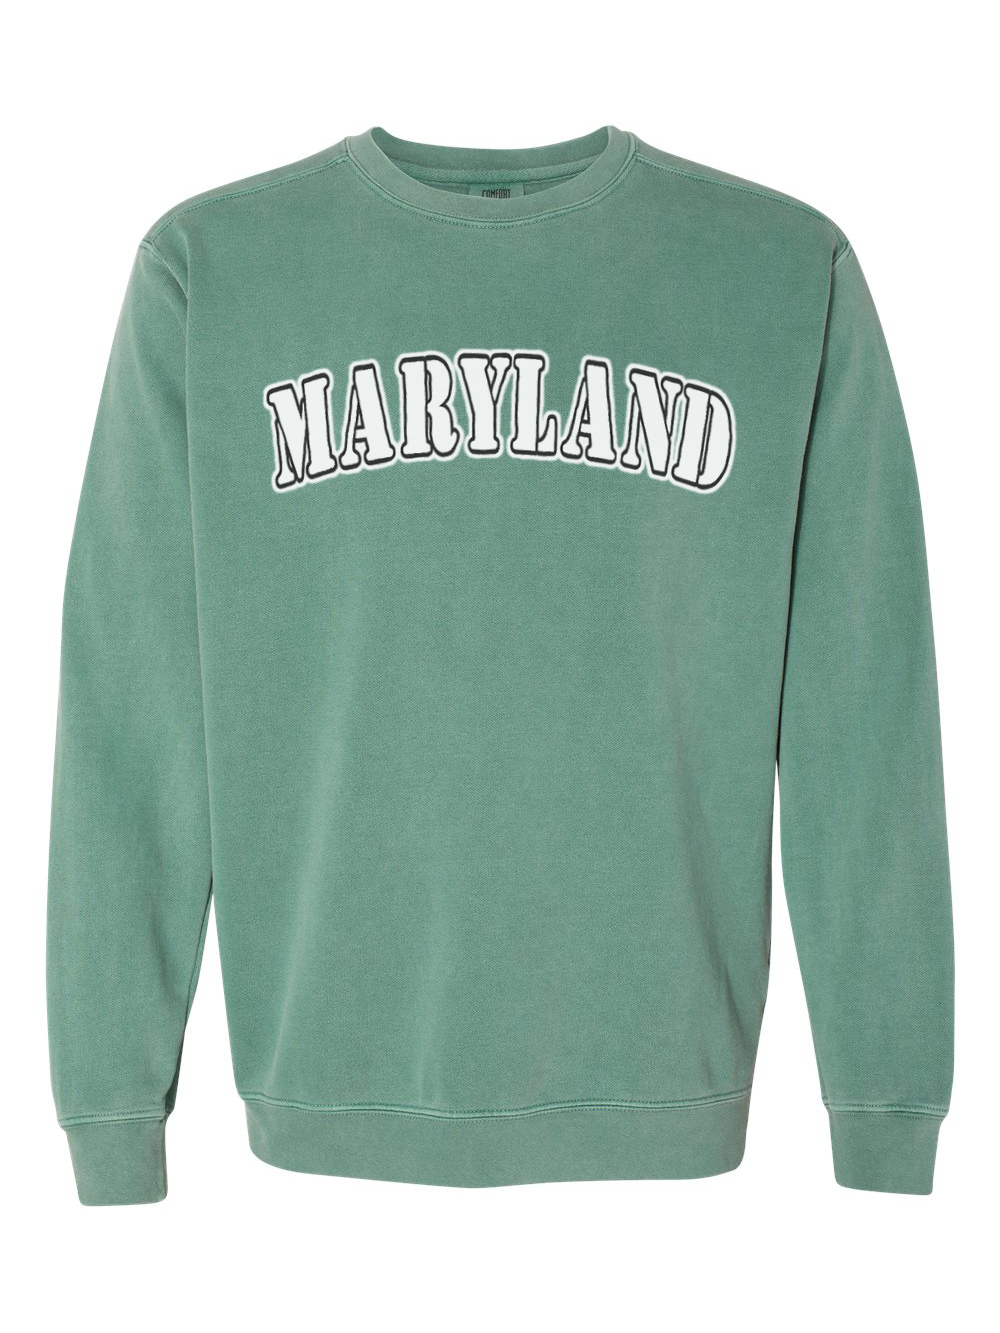 Maryland Gifts Plain Text Comfort Colors Crewneck (Light Green)